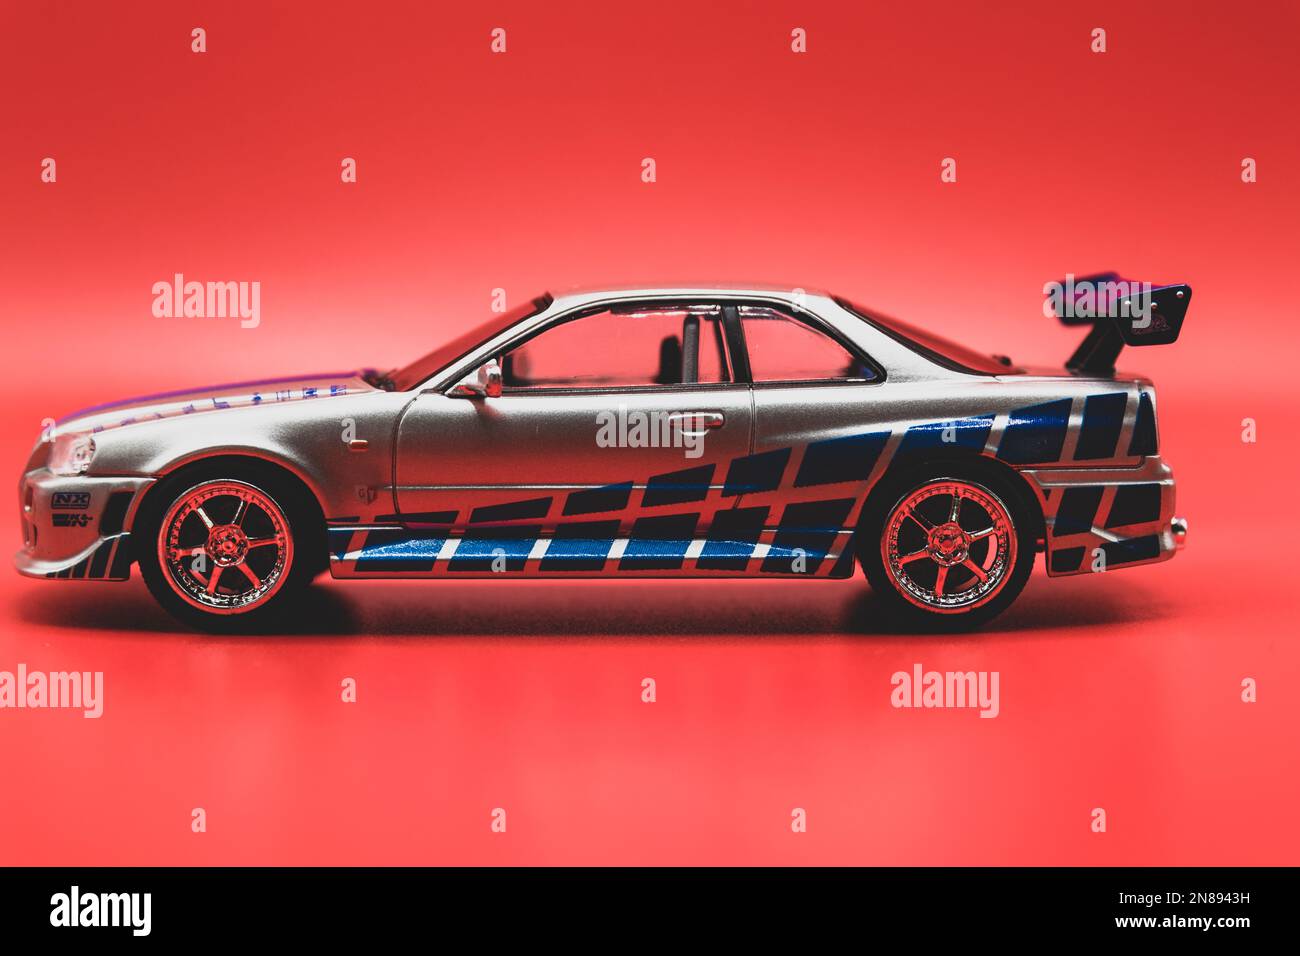 Autovettura FAST&Furious Nissan Skyline GT-R R34 1:43, vista laterale, sfondo rosso Foto Stock